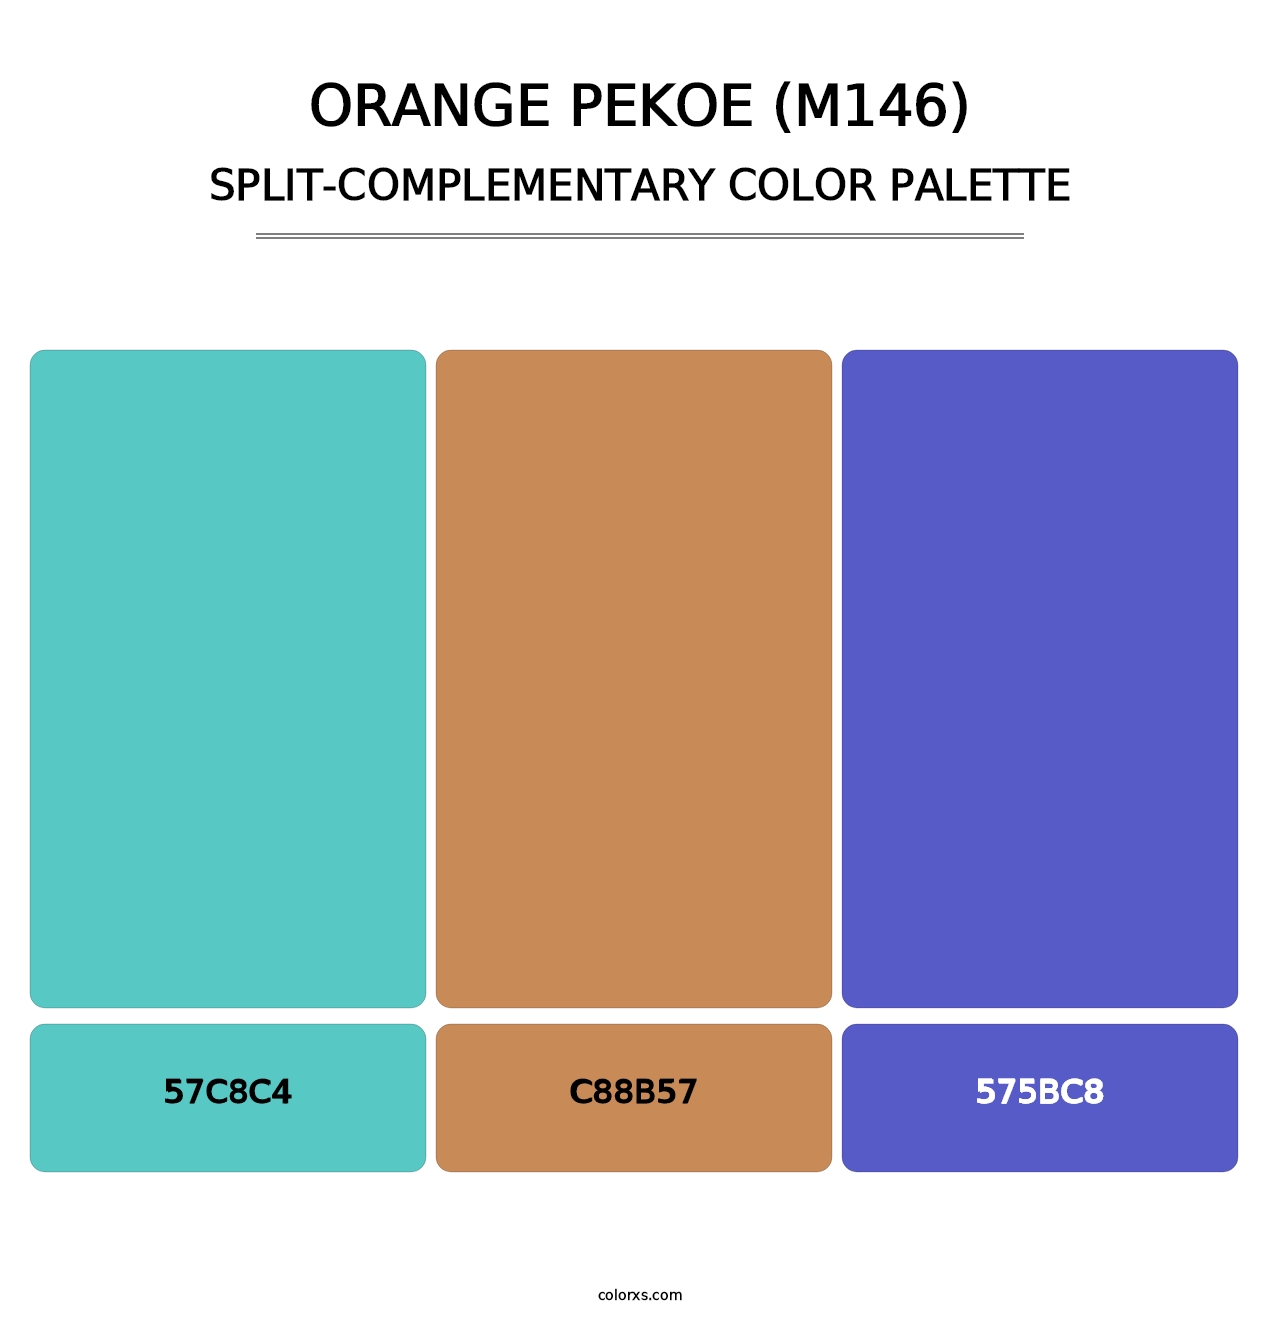 Orange Pekoe (M146) - Split-Complementary Color Palette